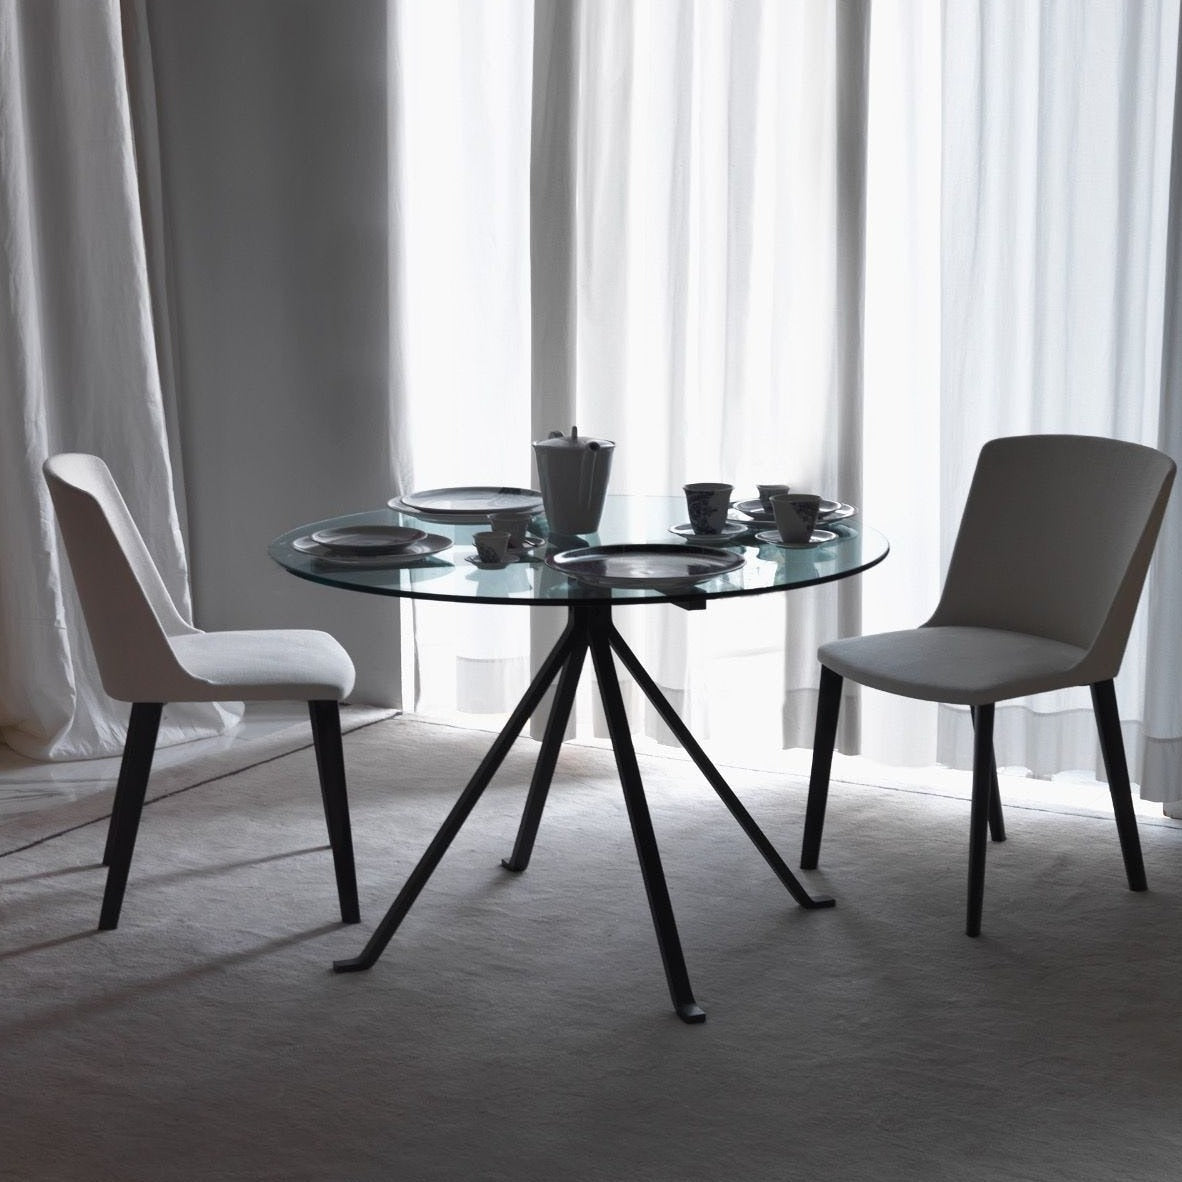 Driade Cugino Round Table | Panik Design